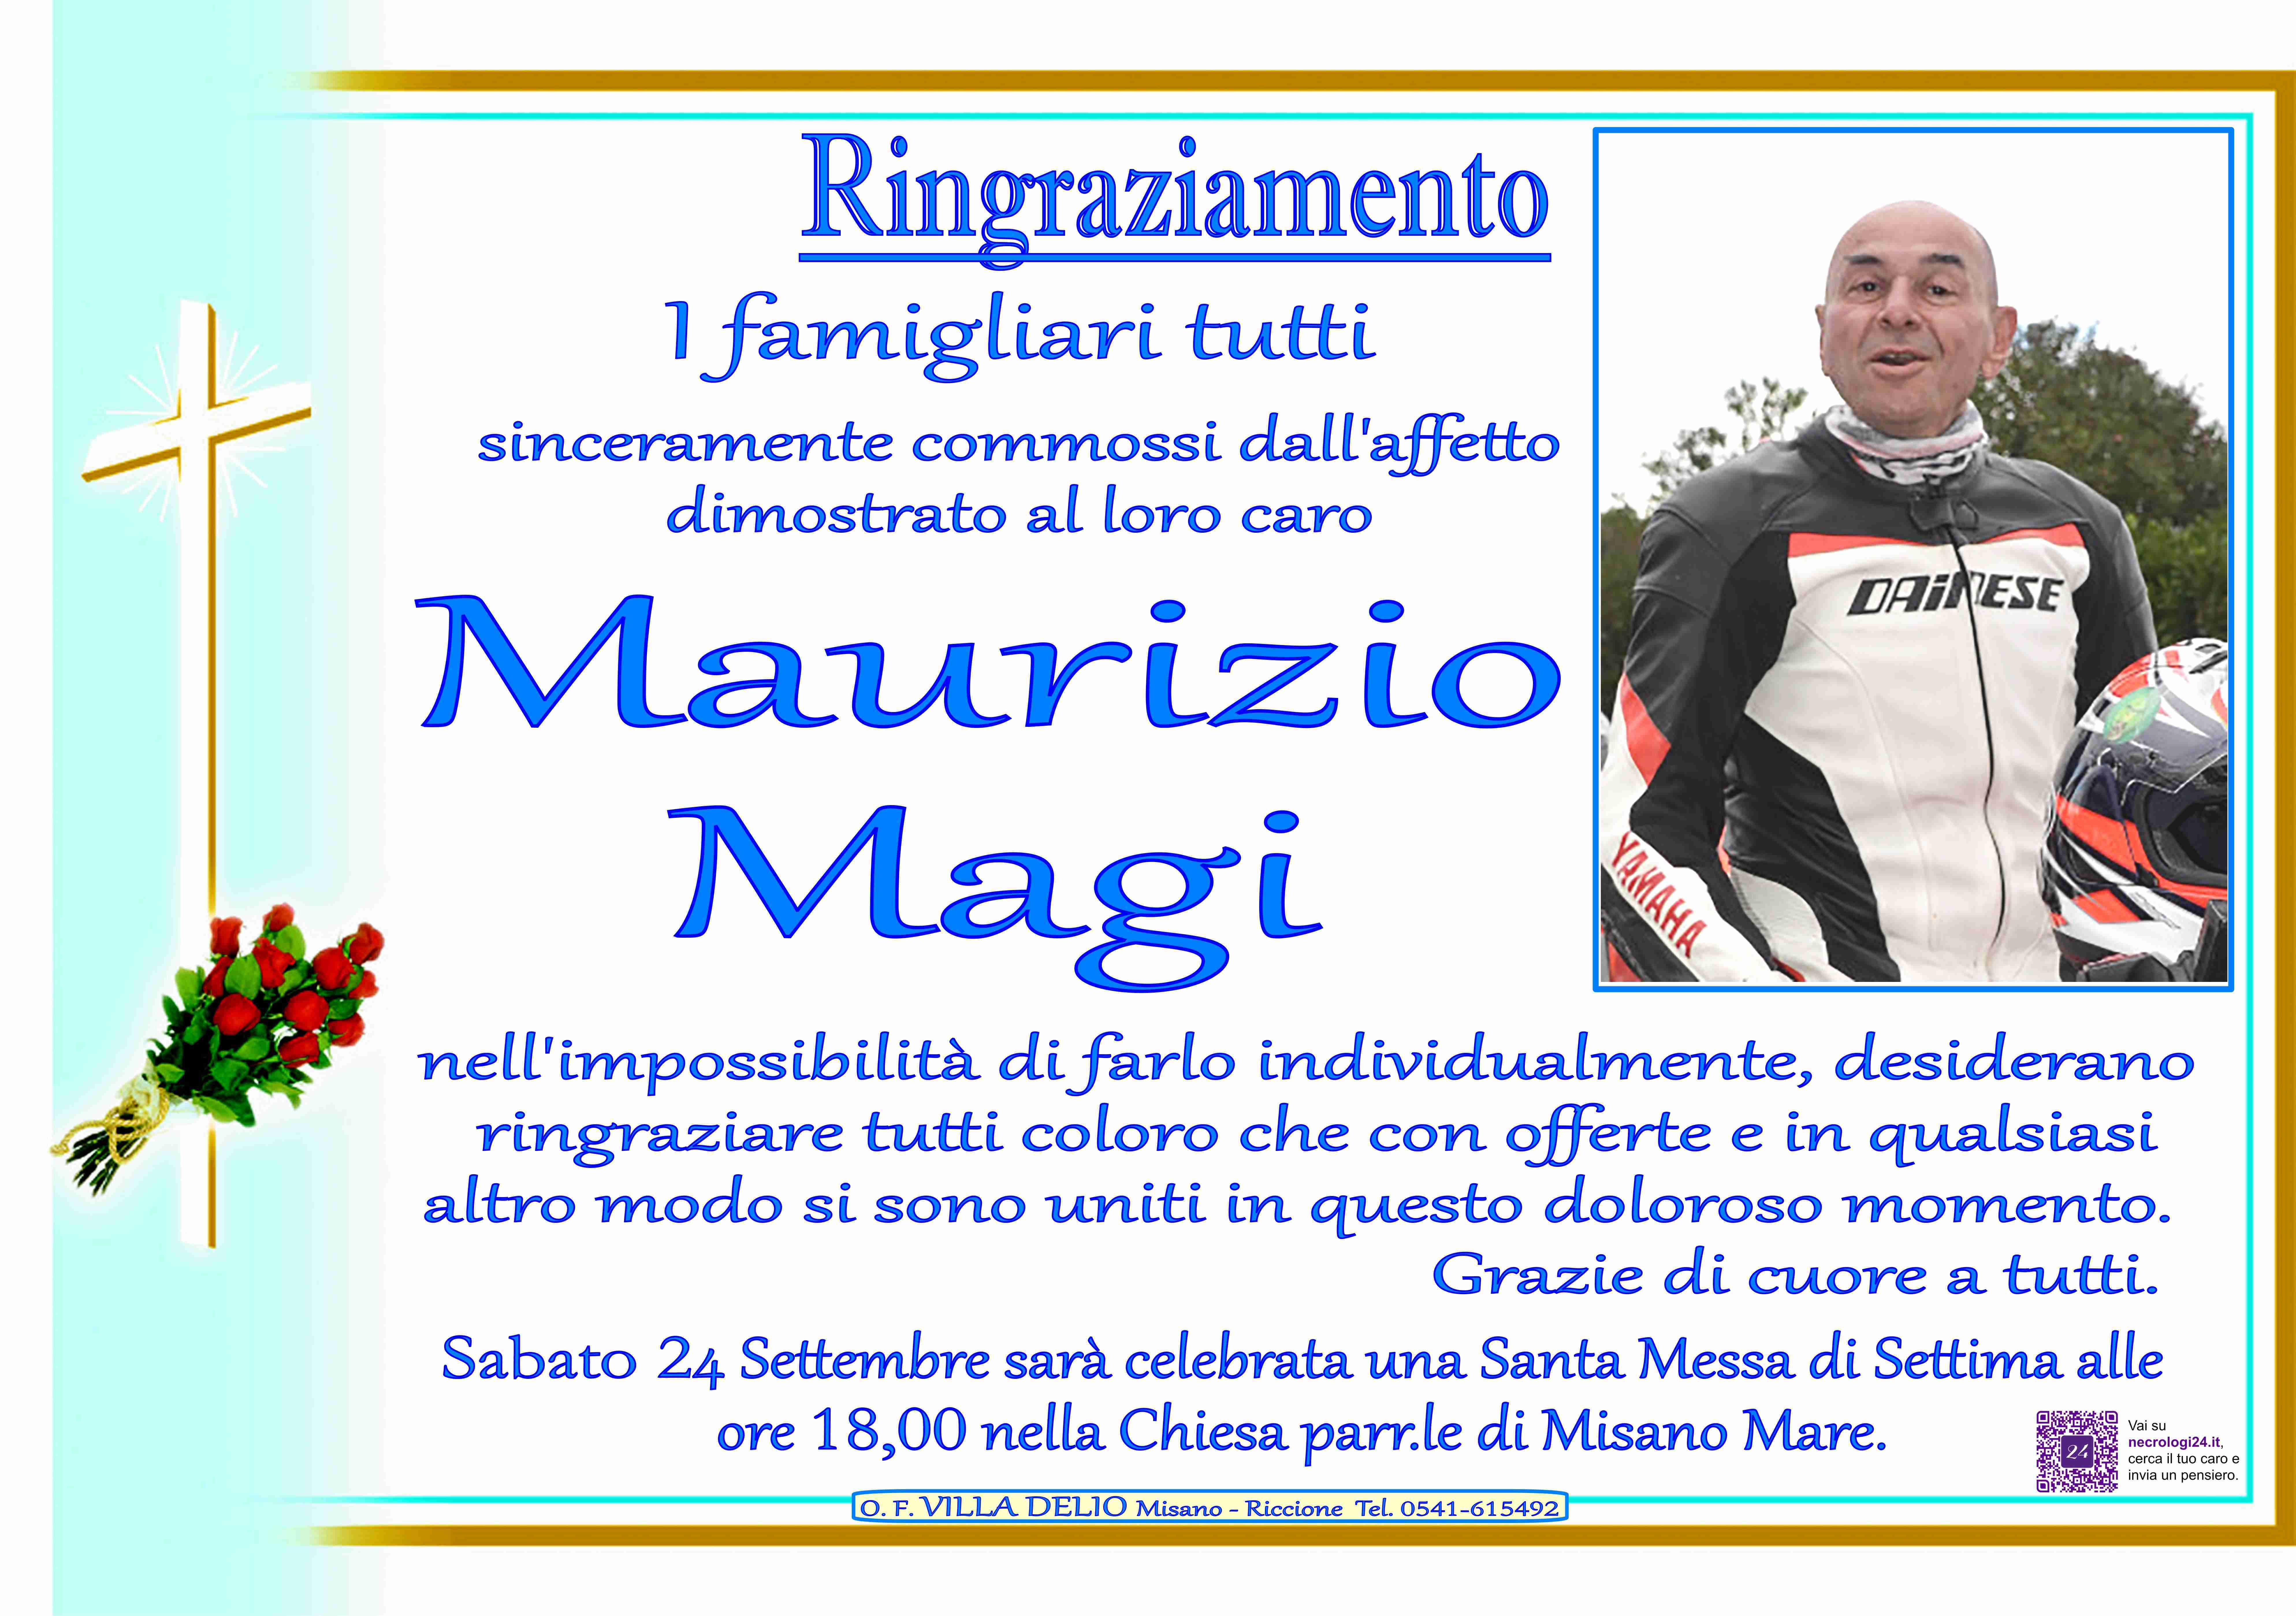 Maurizio Magi